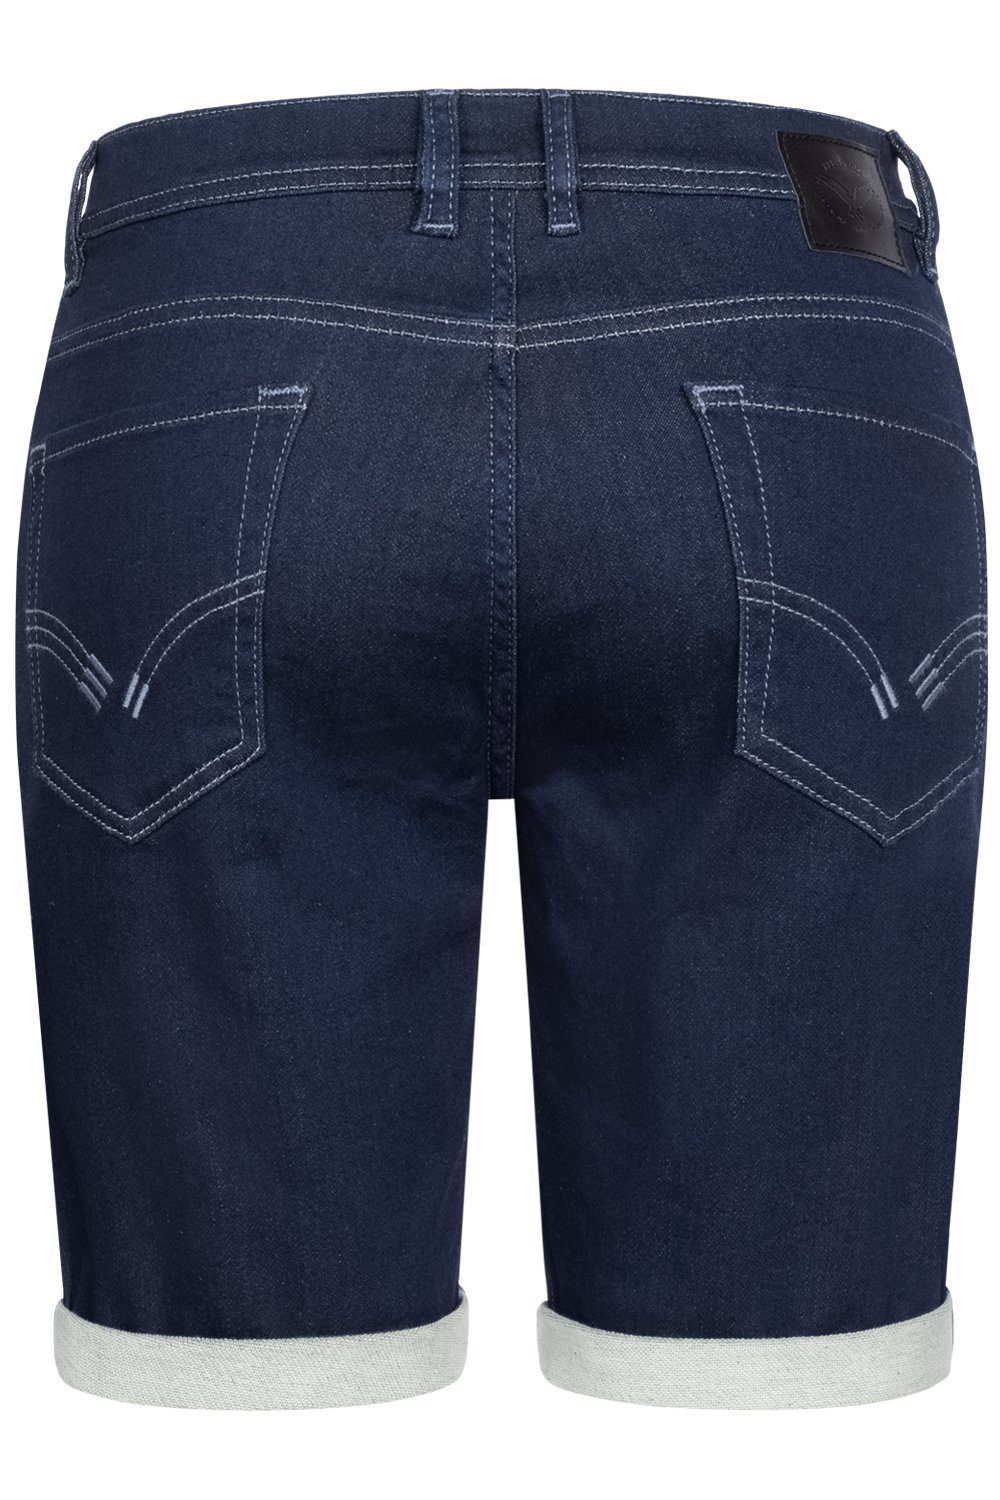 5-Pocket-Style, Denim Summer Jeansbermudas fv-Wed:ding, Blue Feuervogl Classic Unisex Bermuda,